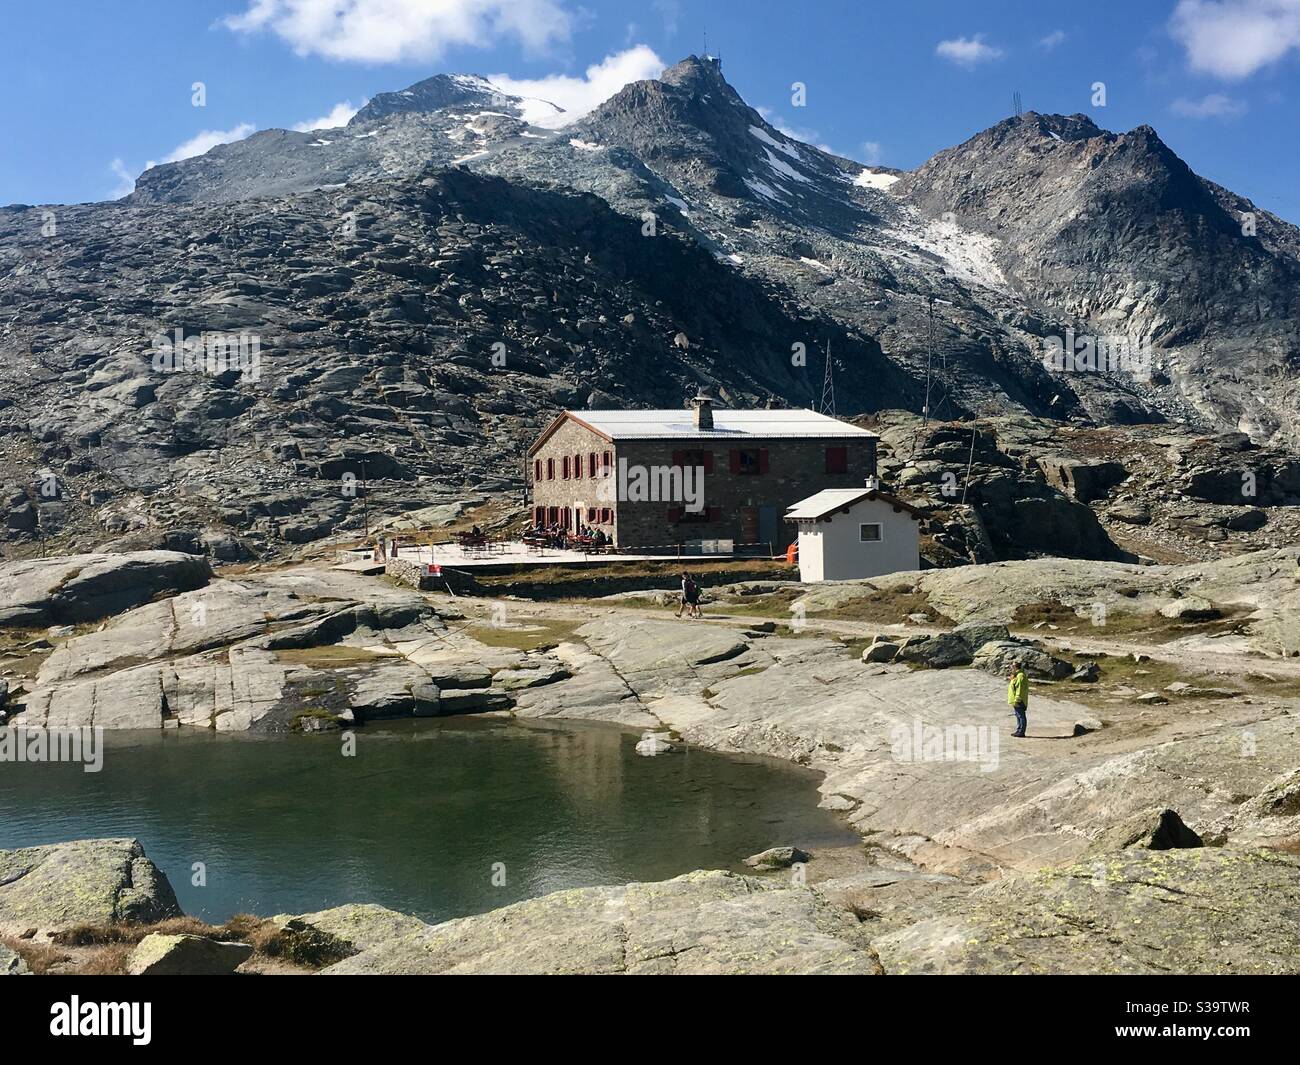 Fuorcla Surlej pass Witz alpine Hut, Corvatschbahn Gondola Station in back  on Mount Murtel, Engadin, Switzerland Stock Photo - Alamy